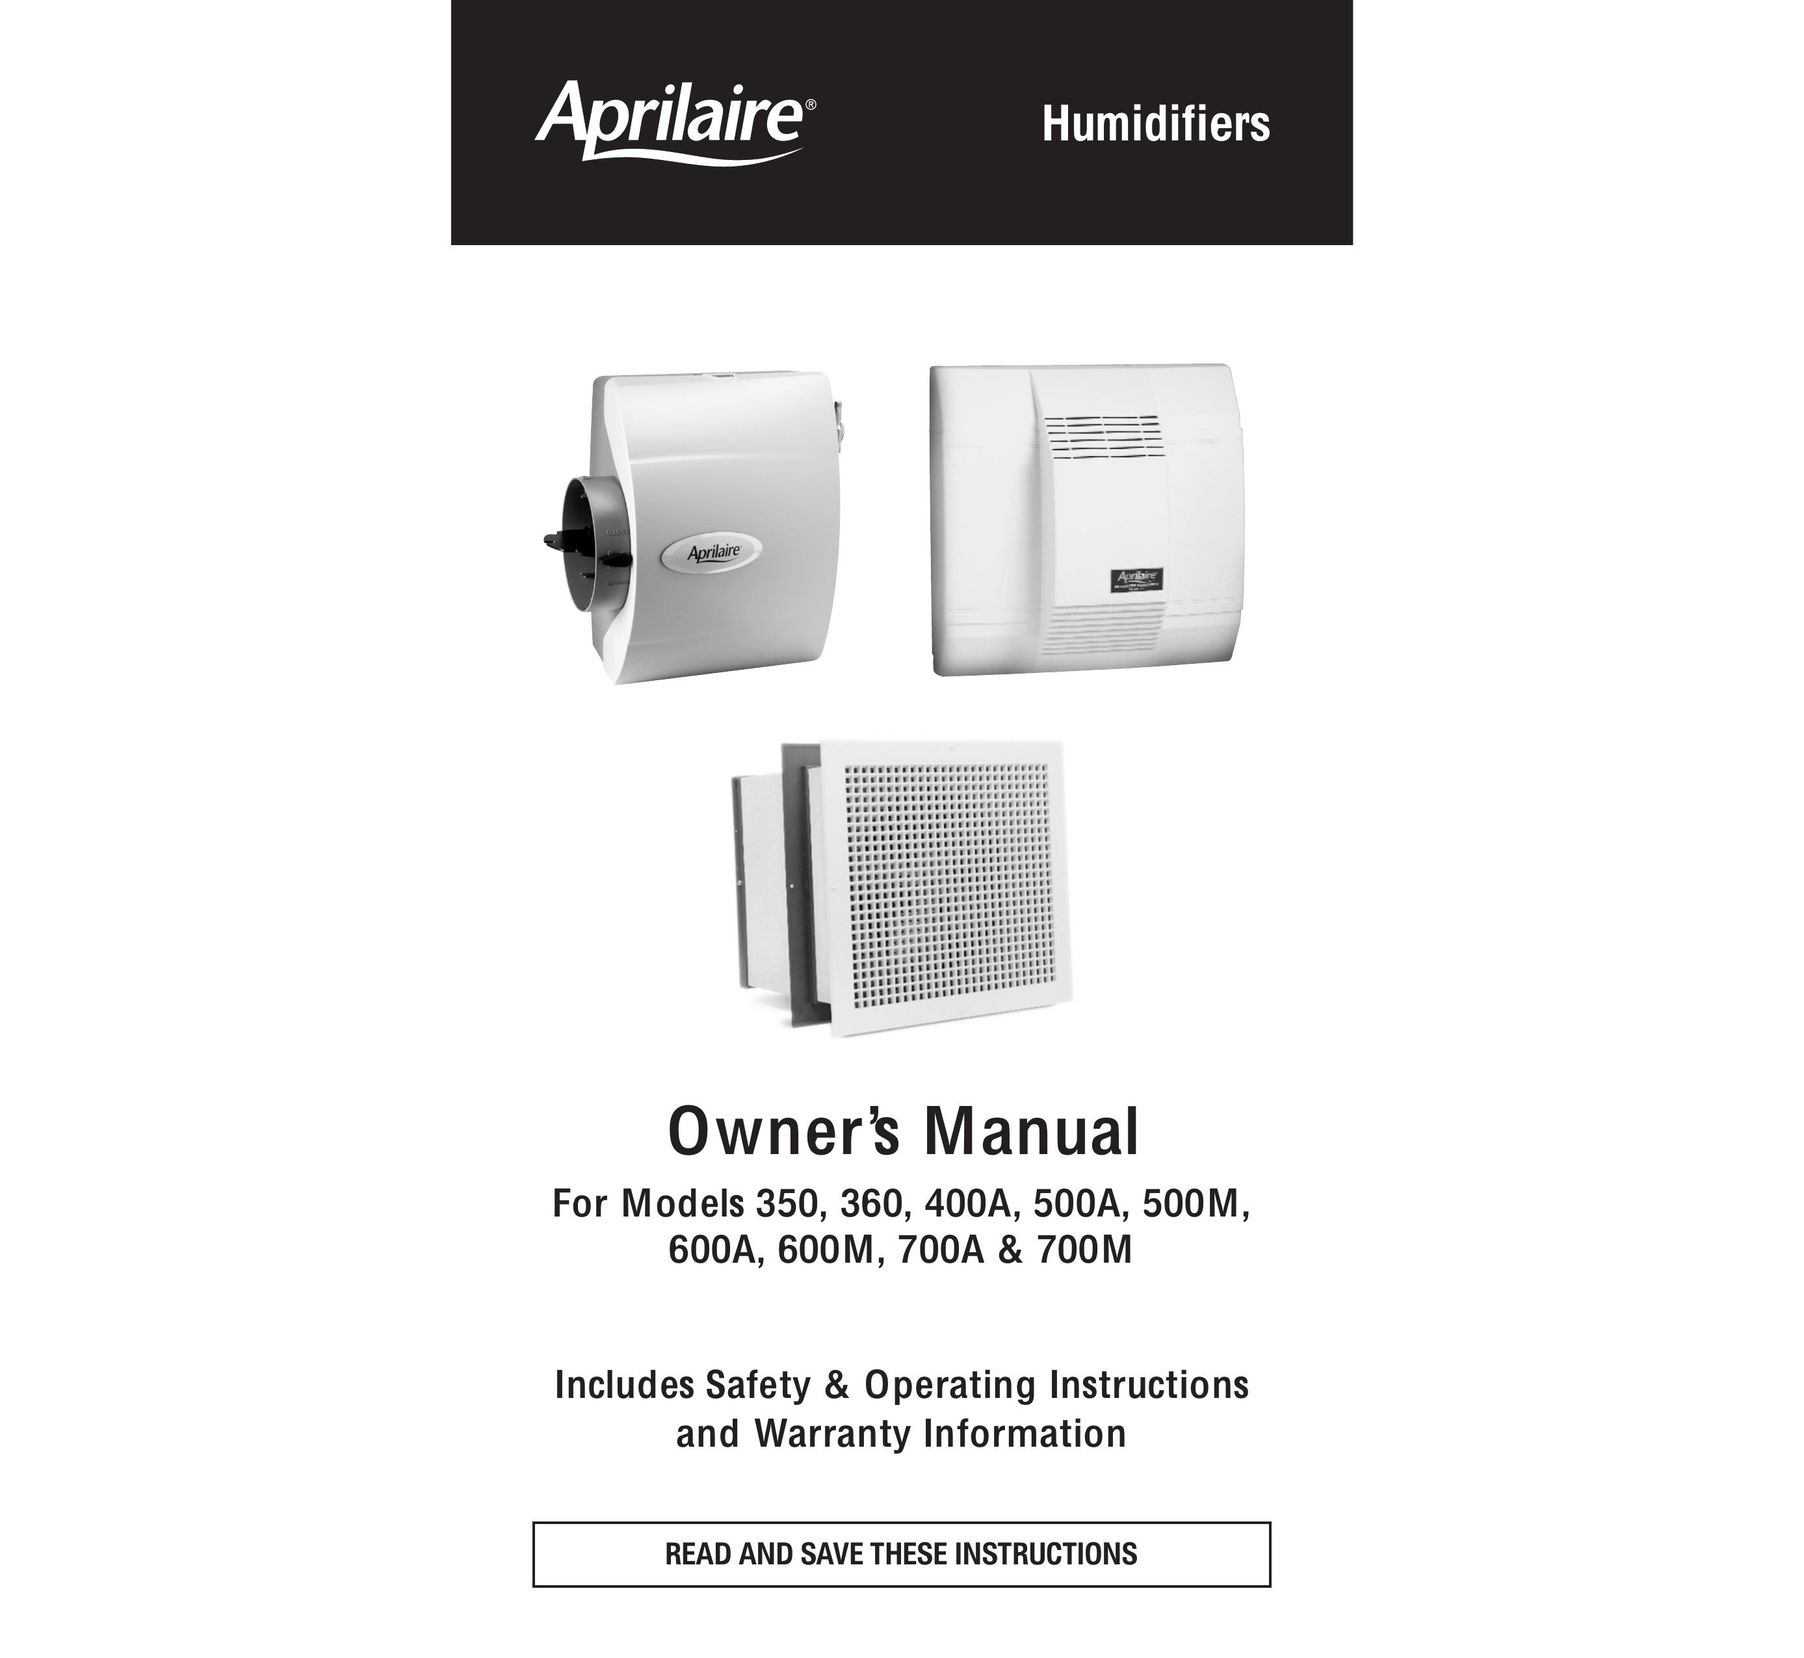 Aprilaire 700M Dehumidifier User Manual